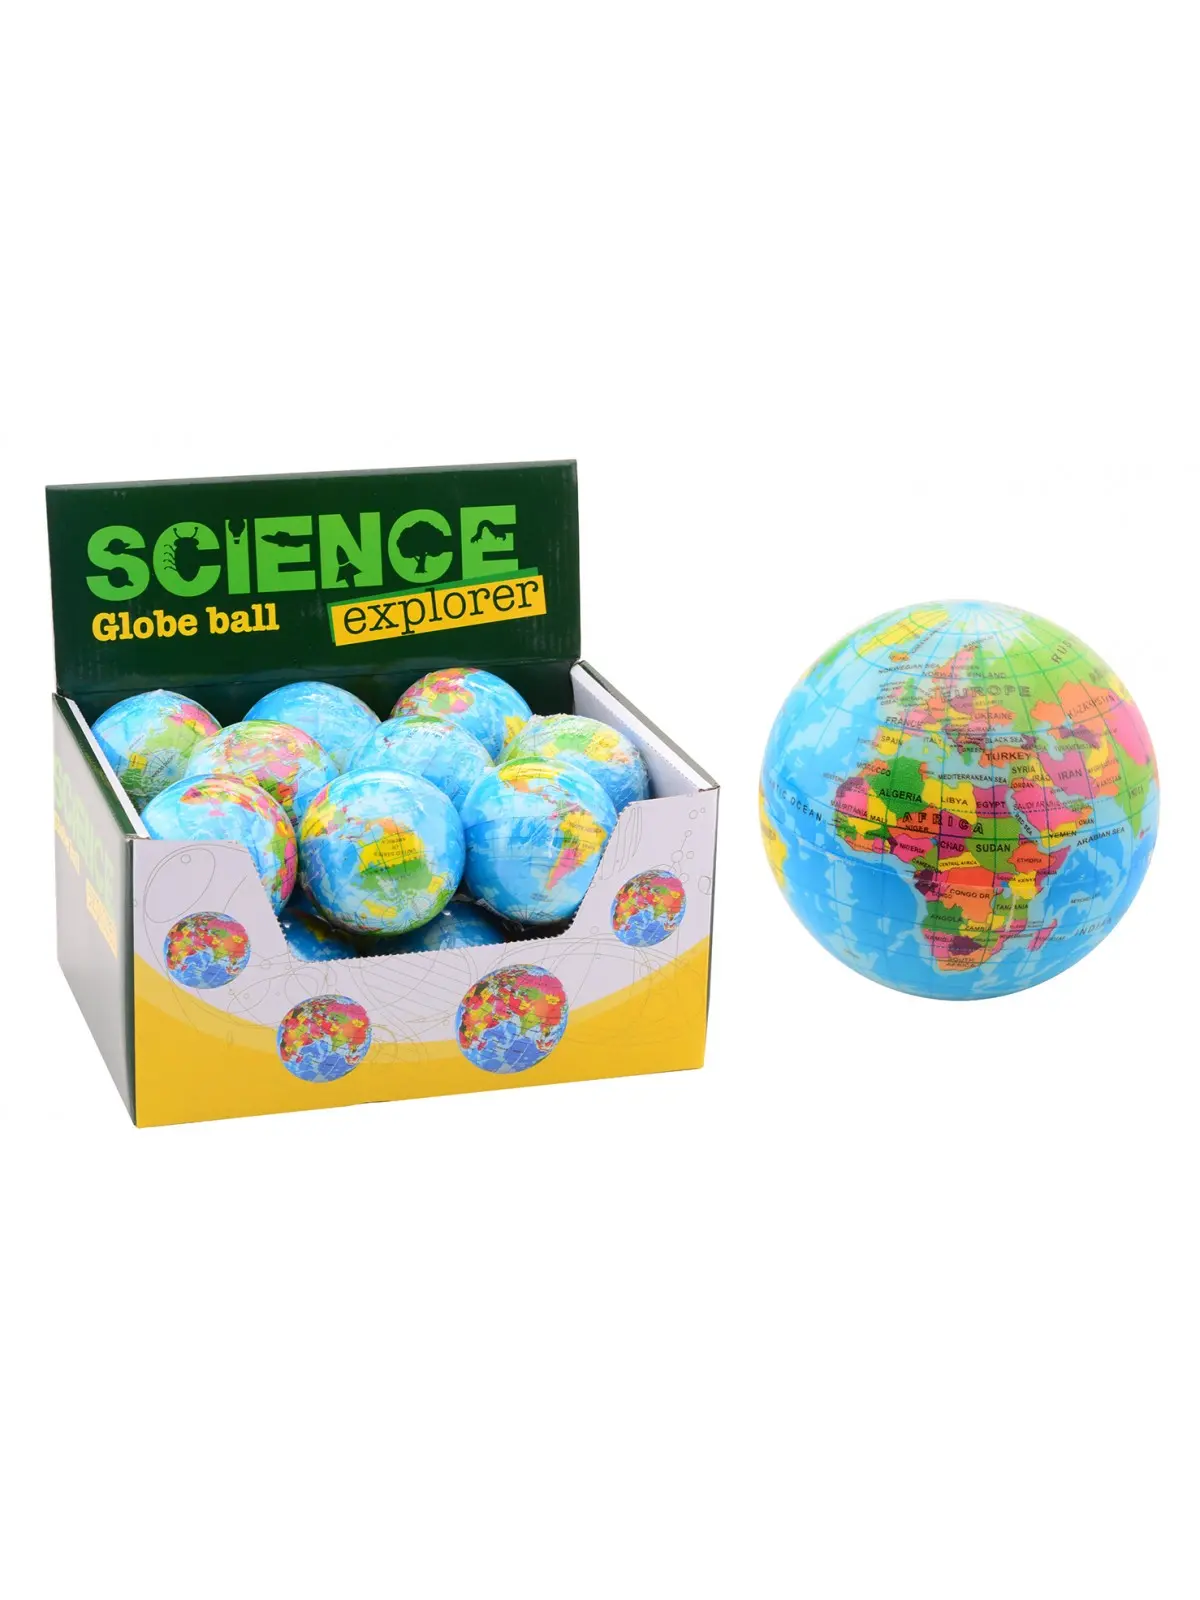 Science Explorer Globe Ball Soft